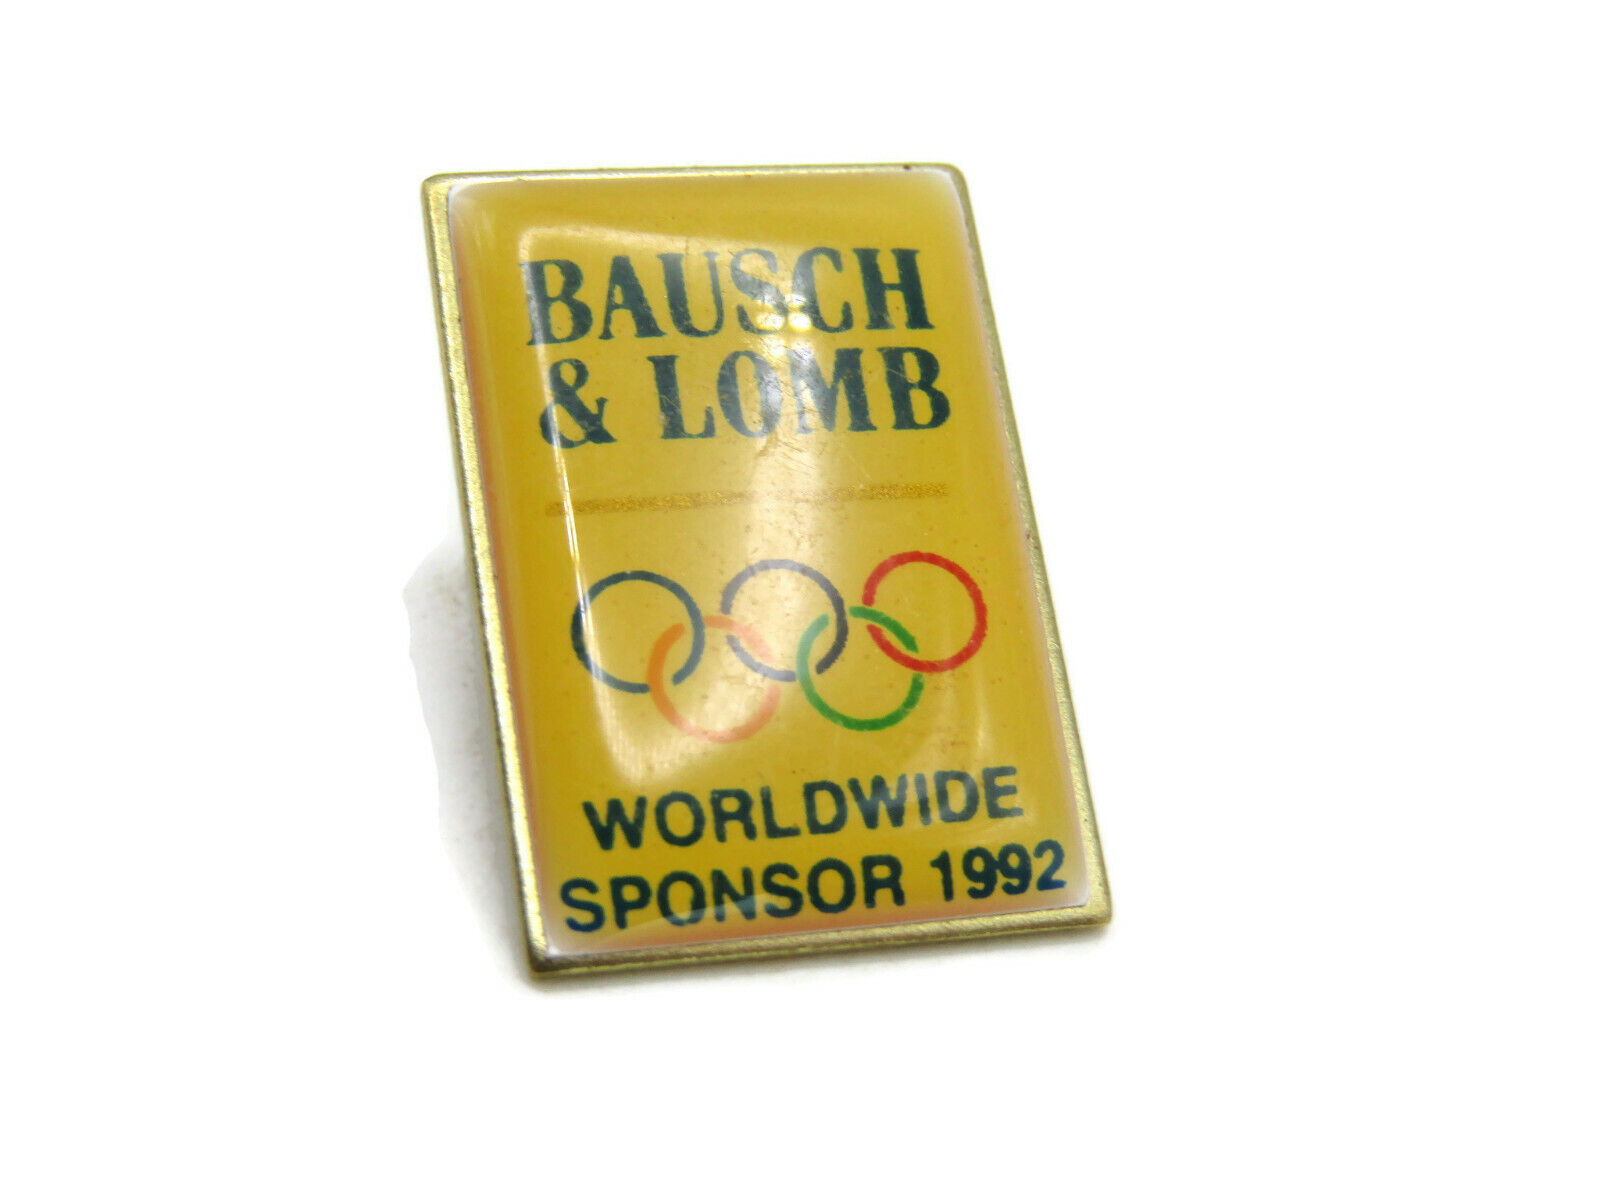 Bausch & Lomb Pin Worldwide Olympic Sponsor 1992